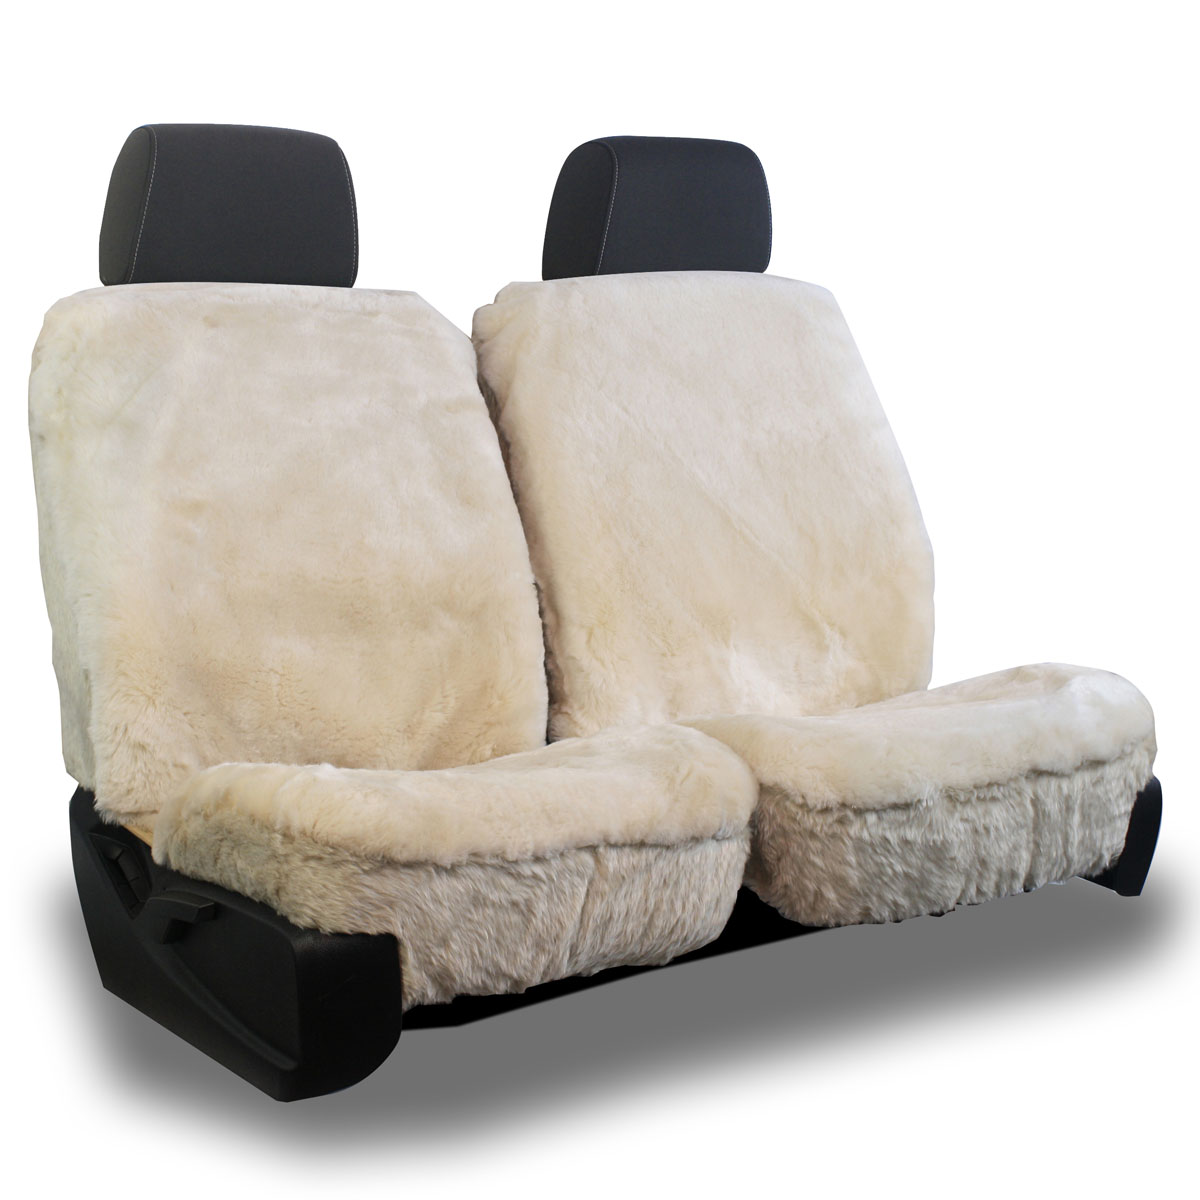 Sheepskin Seat Covers, Sleek Design Authentic Australian Full Size